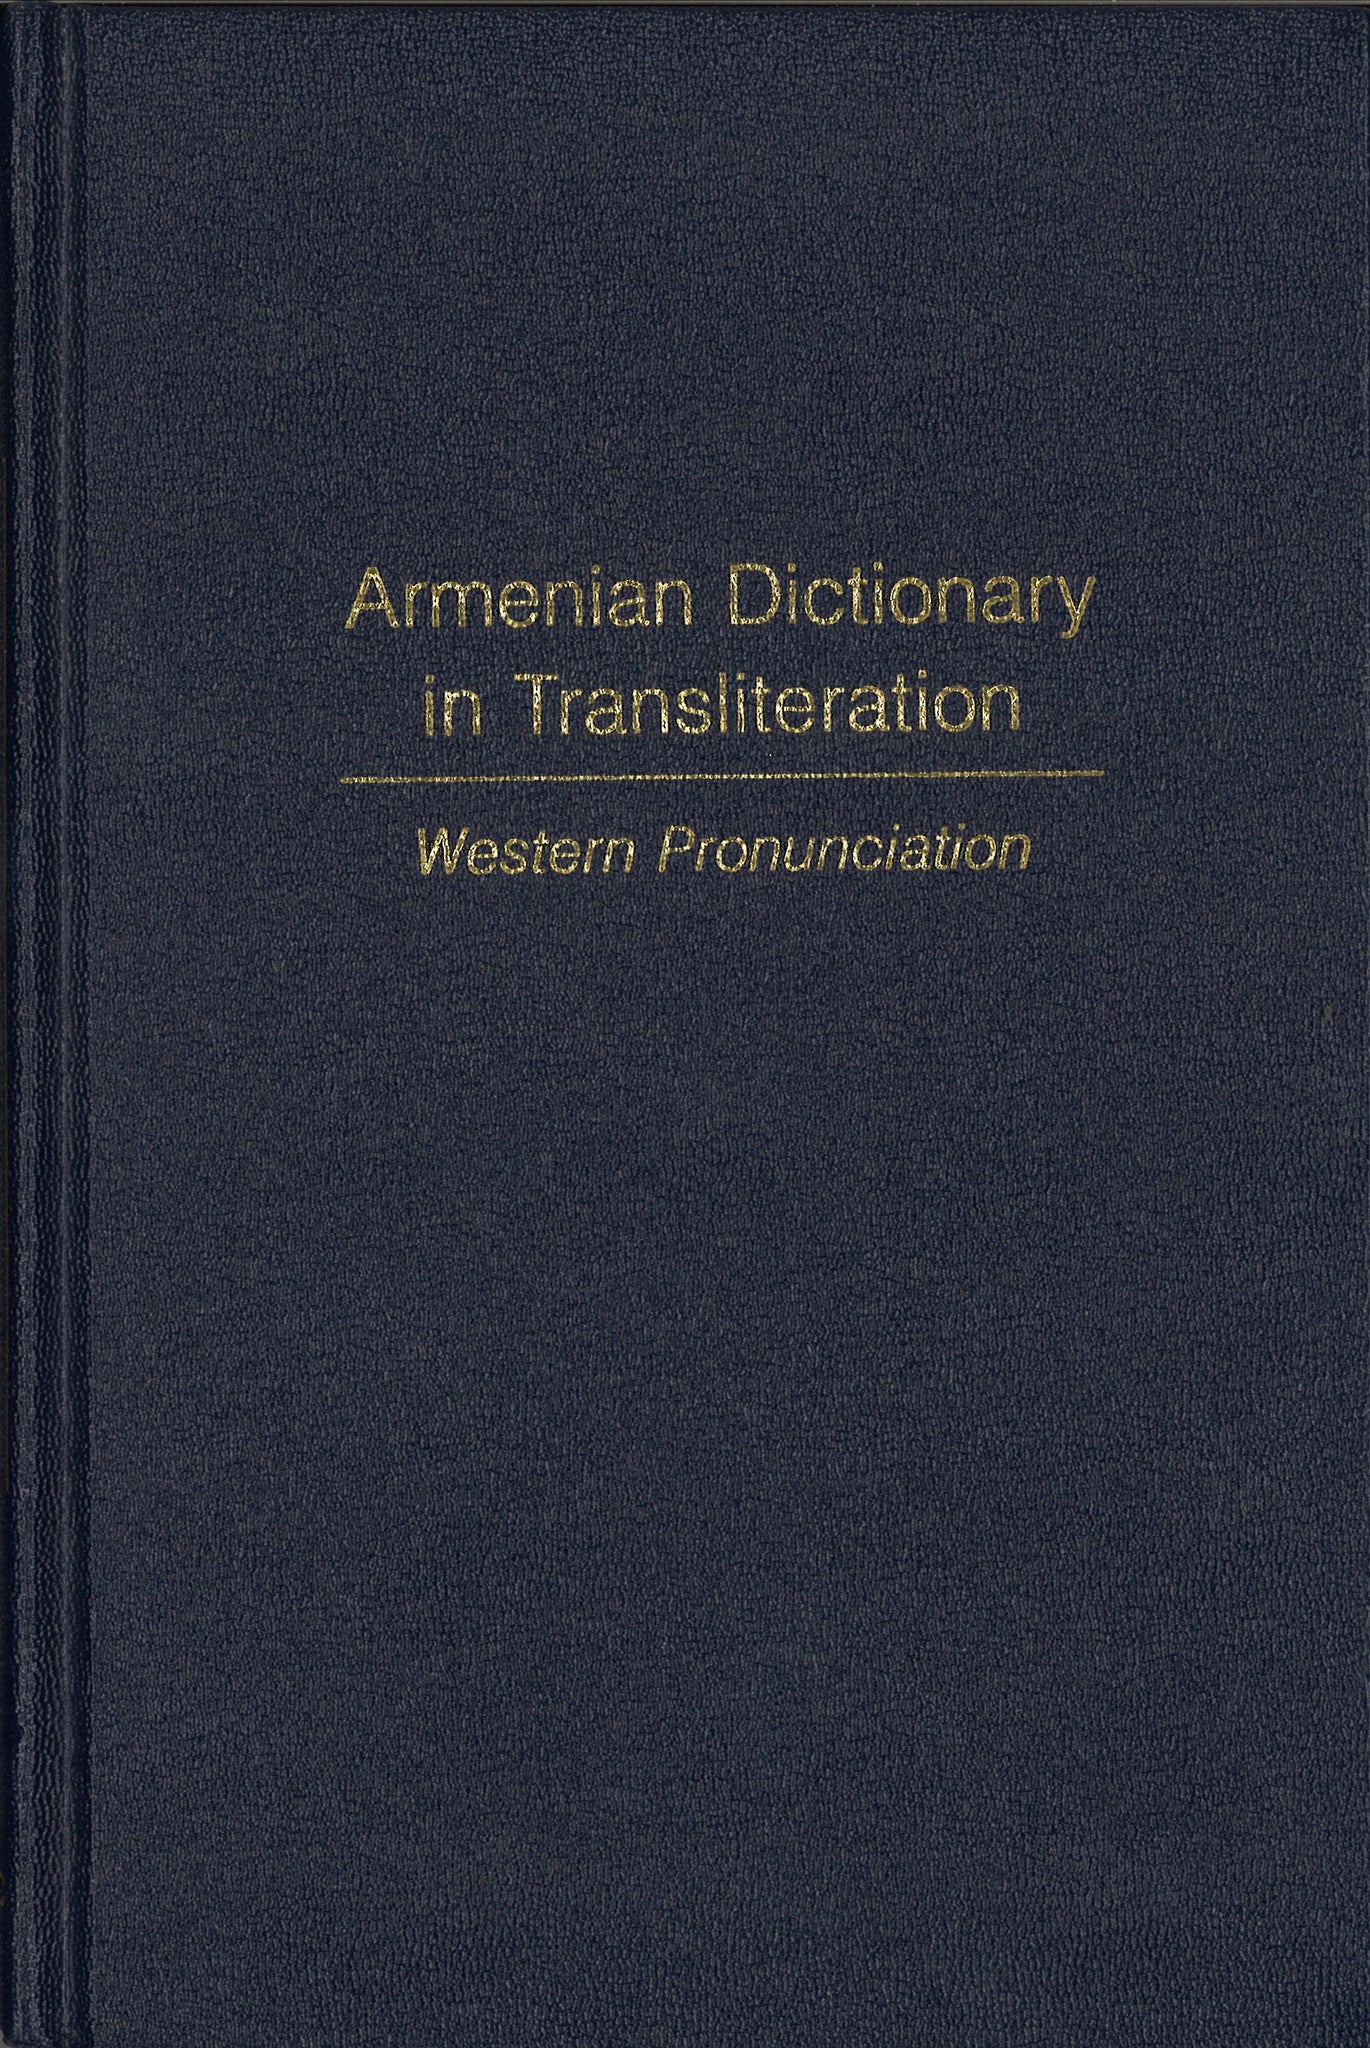 ARMENIAN DICTIONARY IN TRANSLITERATION: Western Pronunciation